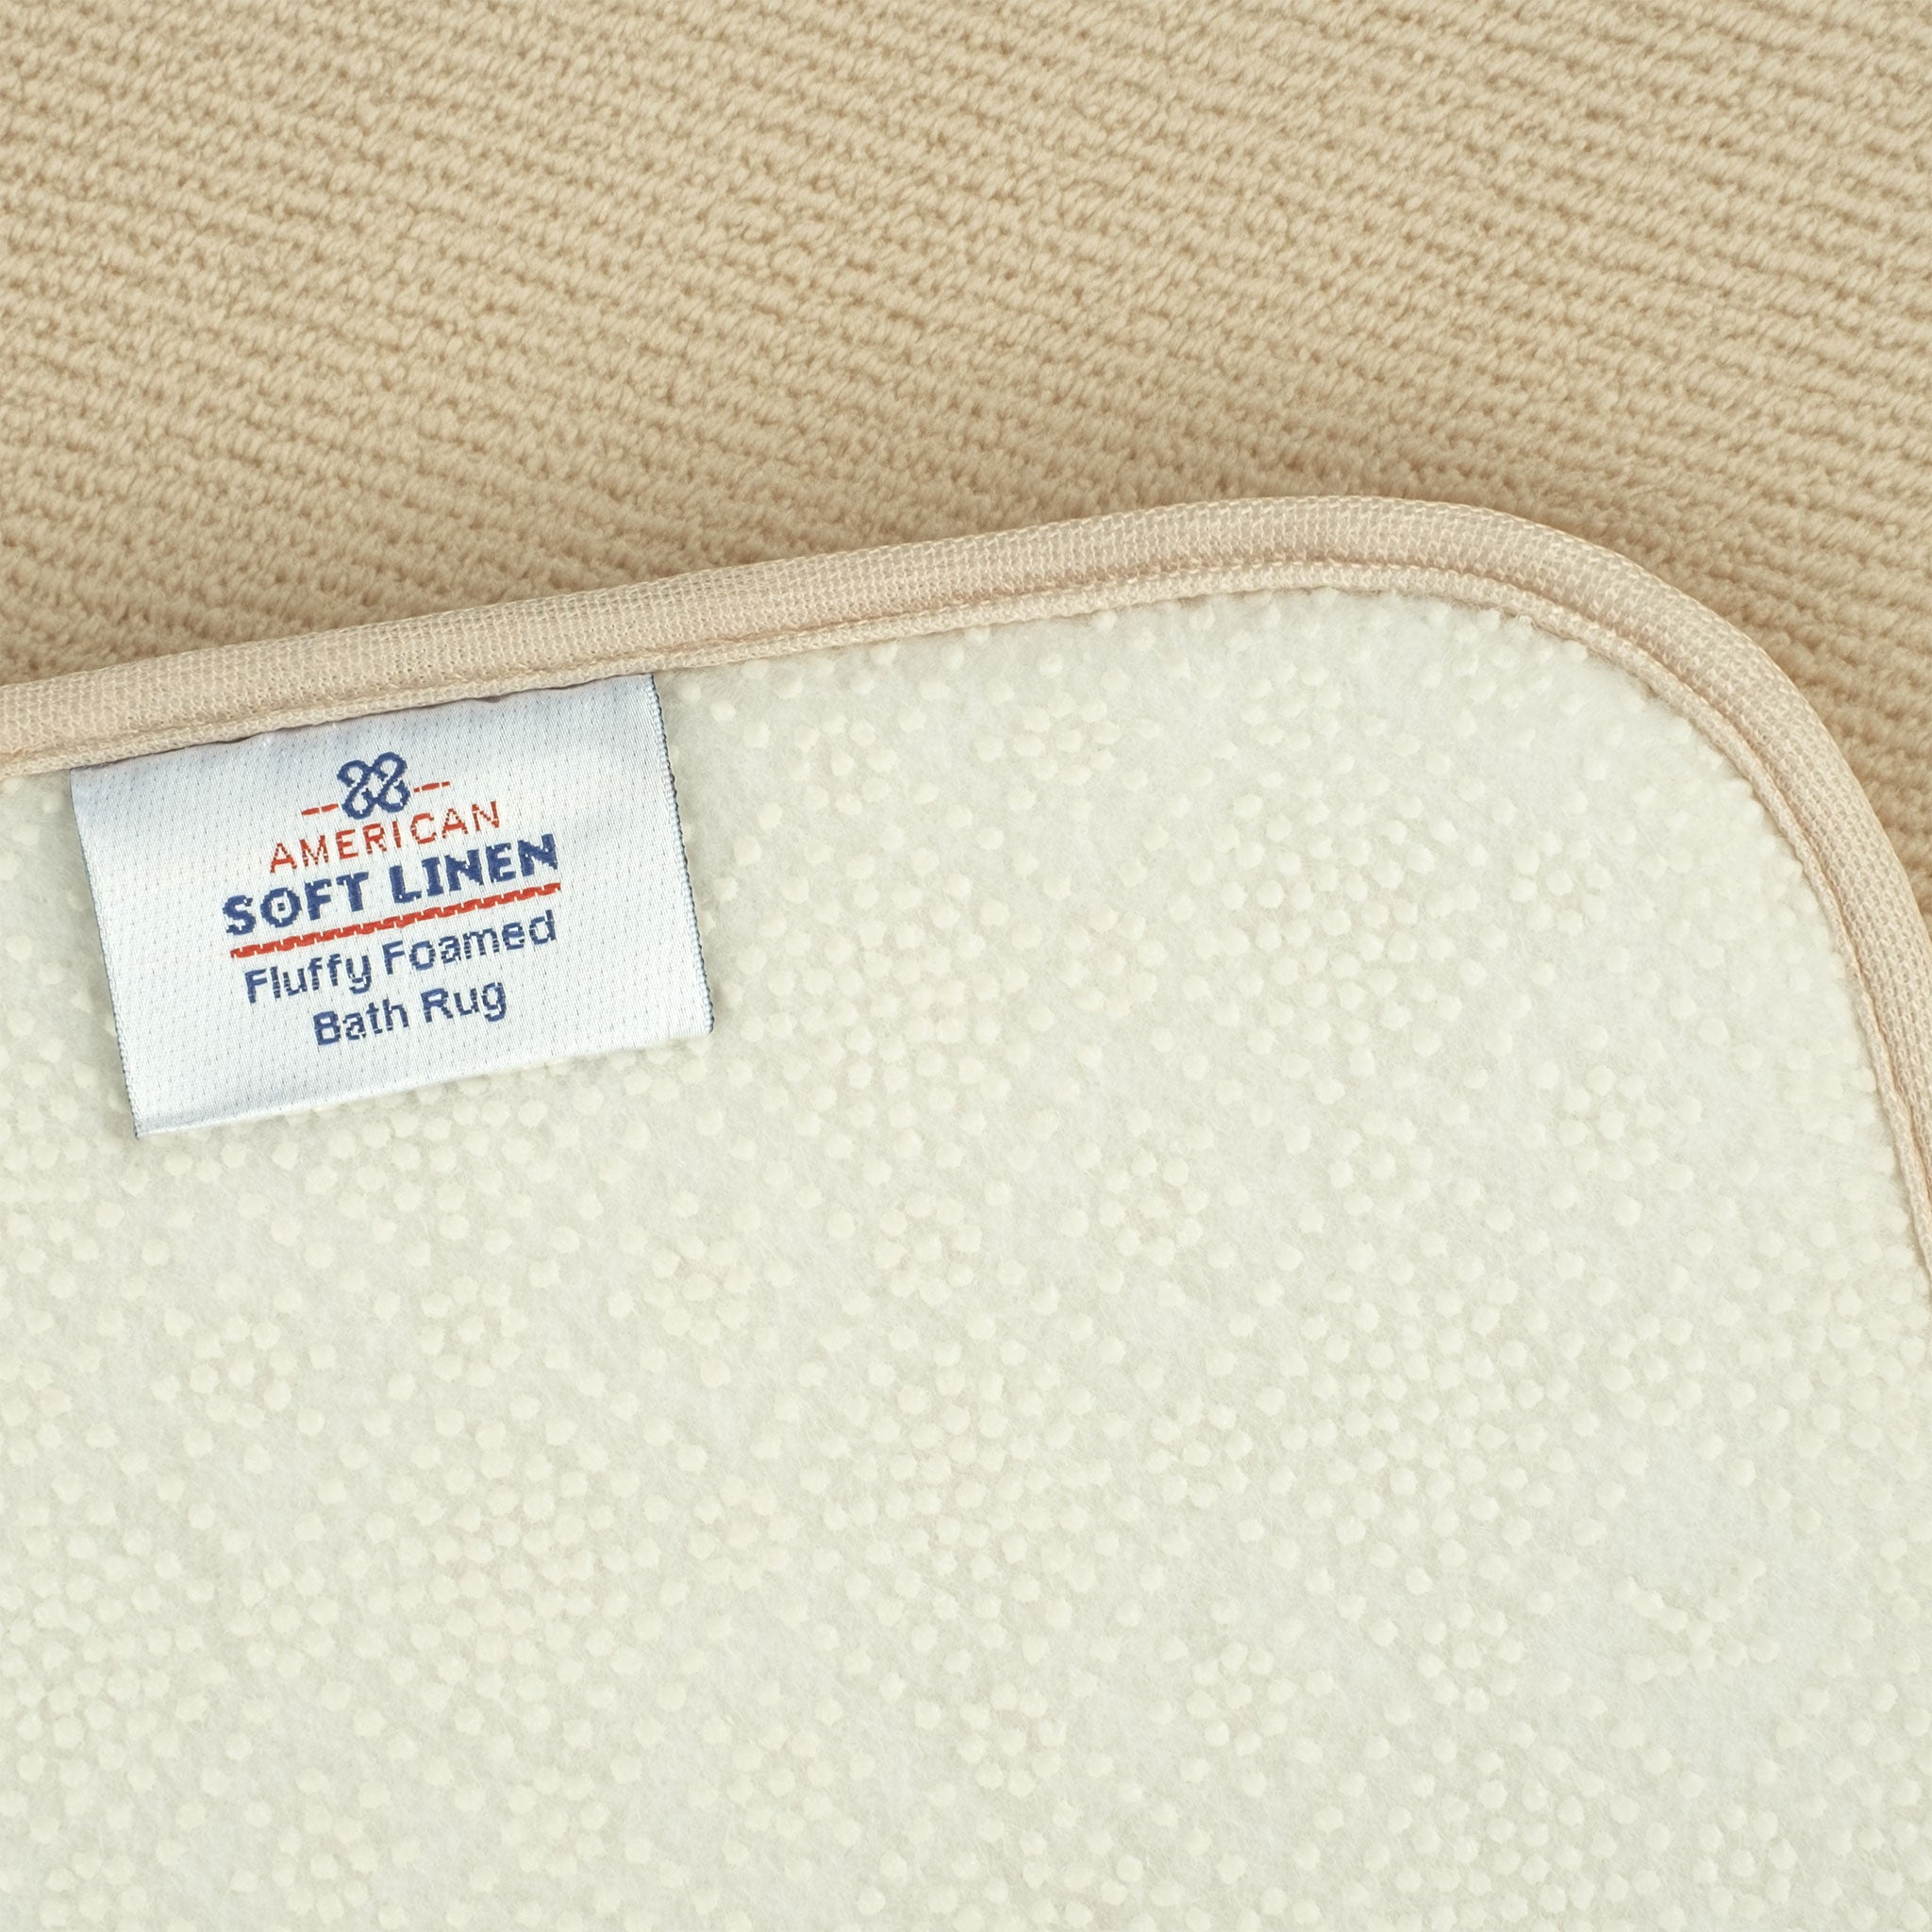 American Soft Linen - Fluffy Foamed Non-Slip Bath Rug-21x32 Inch - Sand-Taupe - 4